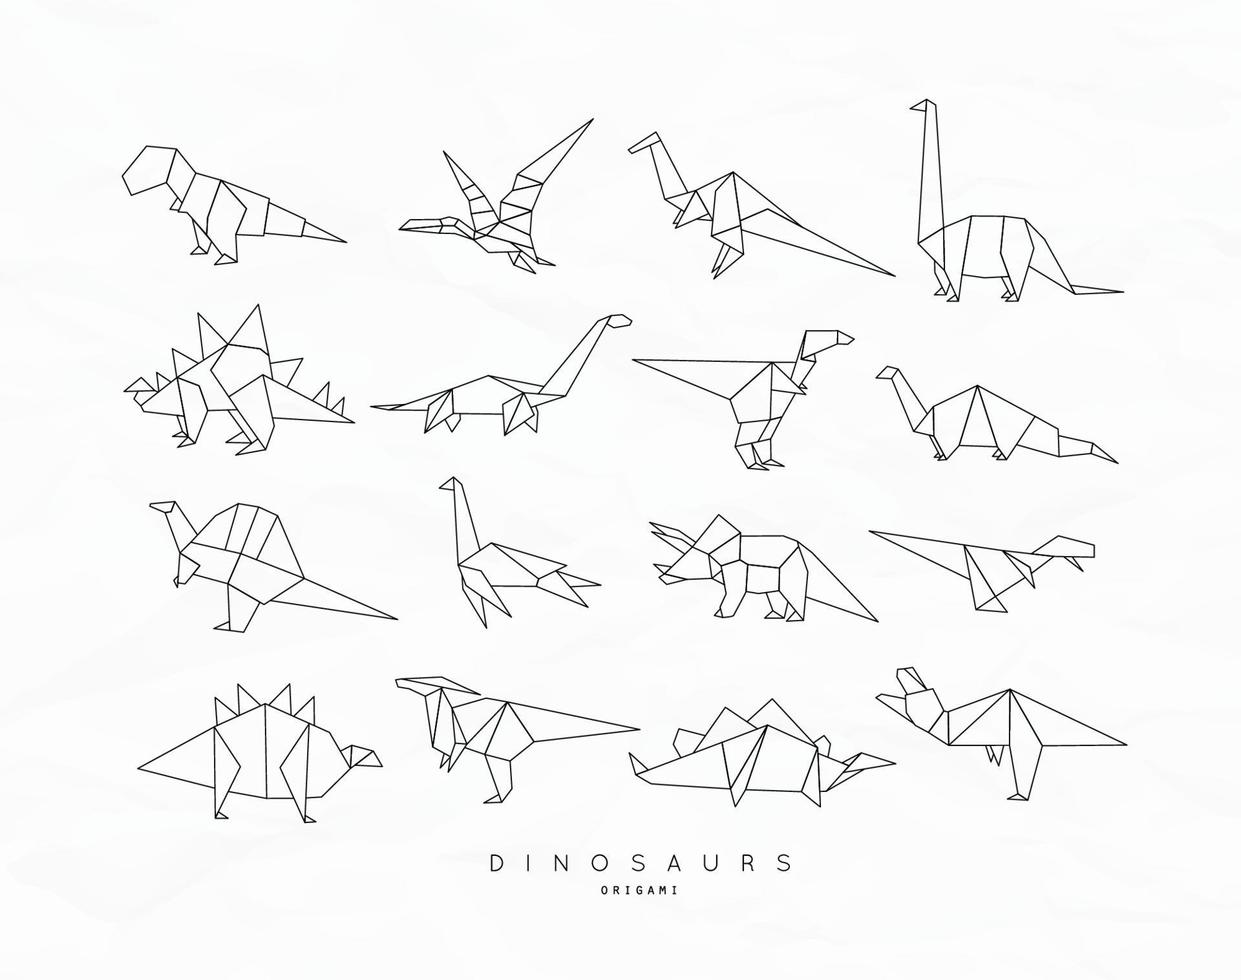 set van dinosaurussen in platte origami stijl tyrannosaurus, pterodactylus, barosaurus, stegosaurus, deinonychus, euoplocephalus, triceratops brachiosaurus tekening met zwarte lijnen op witte achtergrond vector